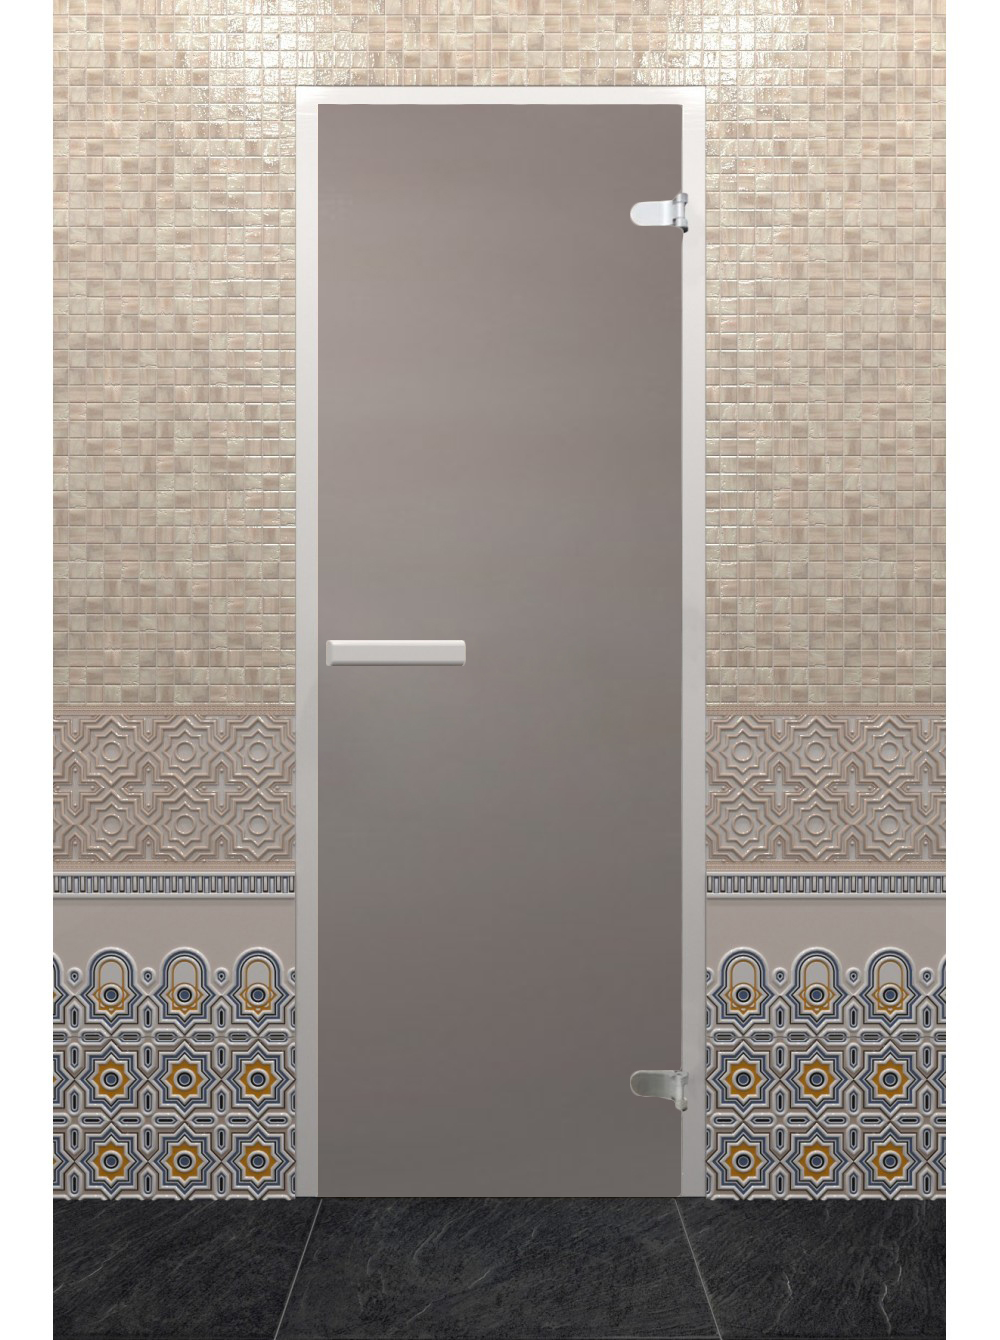 Стеклянная дверь для турецкой бани DoorWood Хамам Лайт Сатин 1900х700 (по коробке)